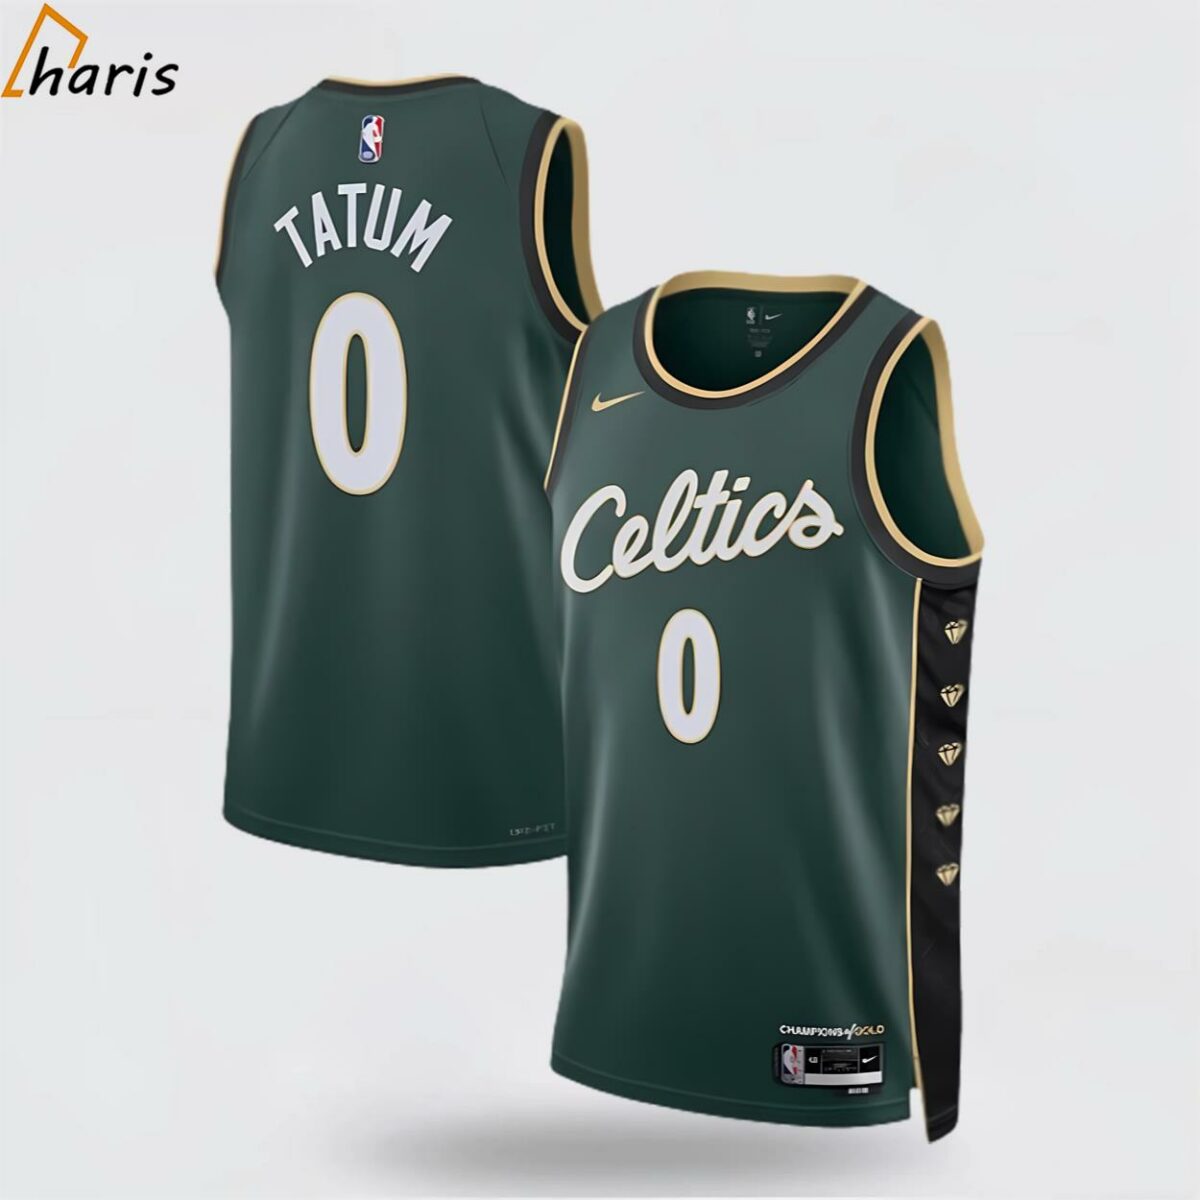 Mens NBA Jayson Tatum Boston Celtics Nike City Jersey 1 jersey